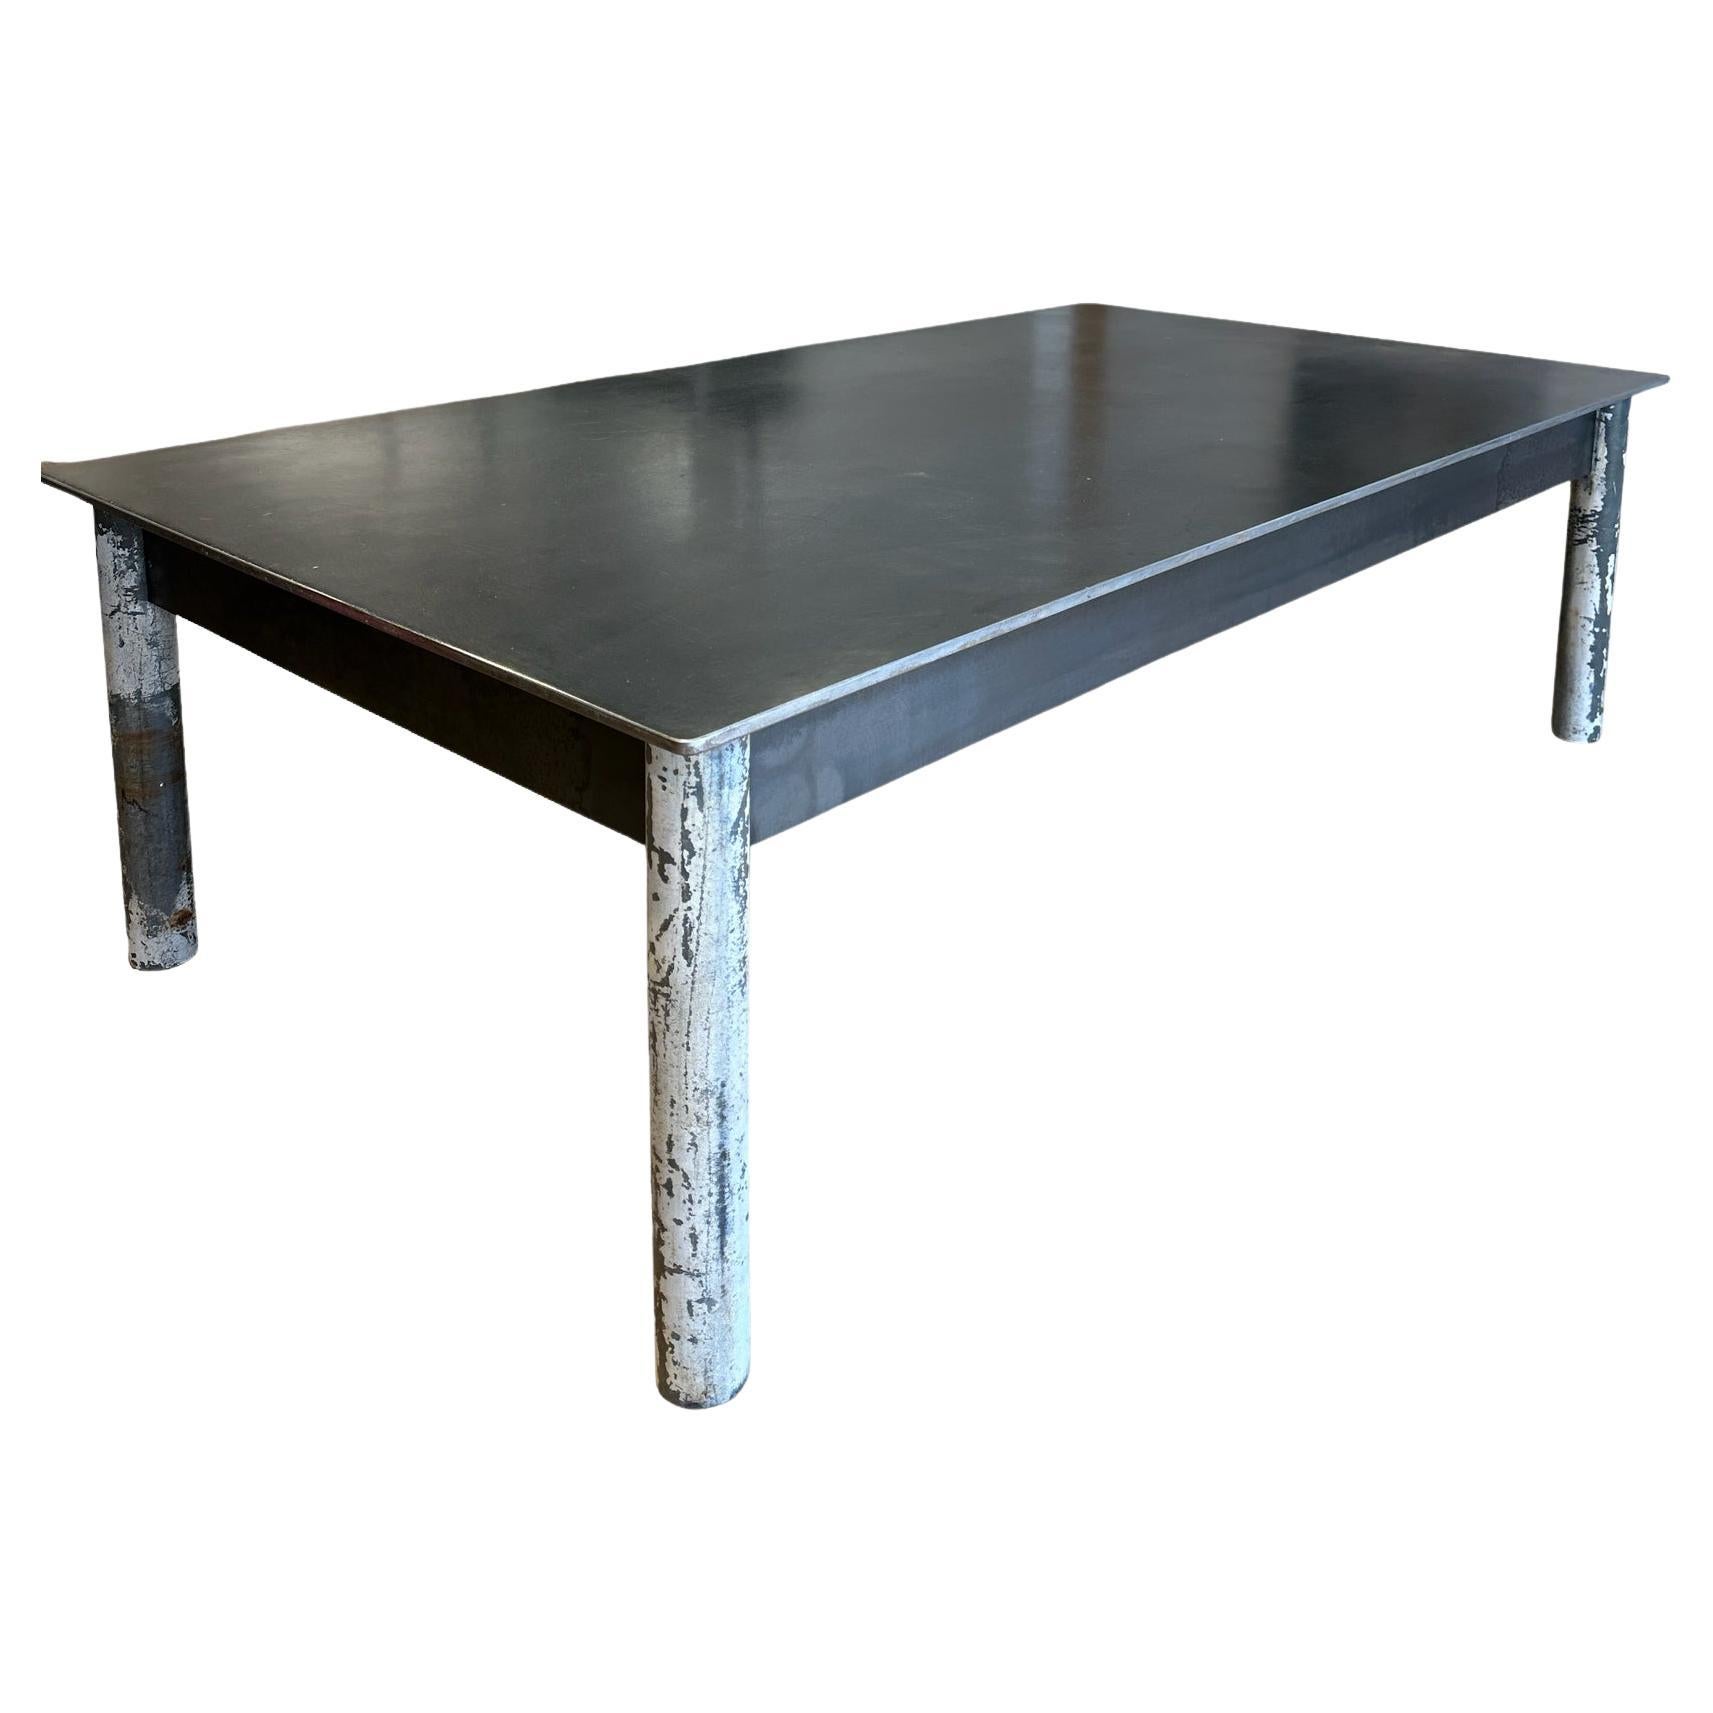 Jim Rose  - Coffee Table, Steel Furniture, Hot Rolled and Repurposed Steel